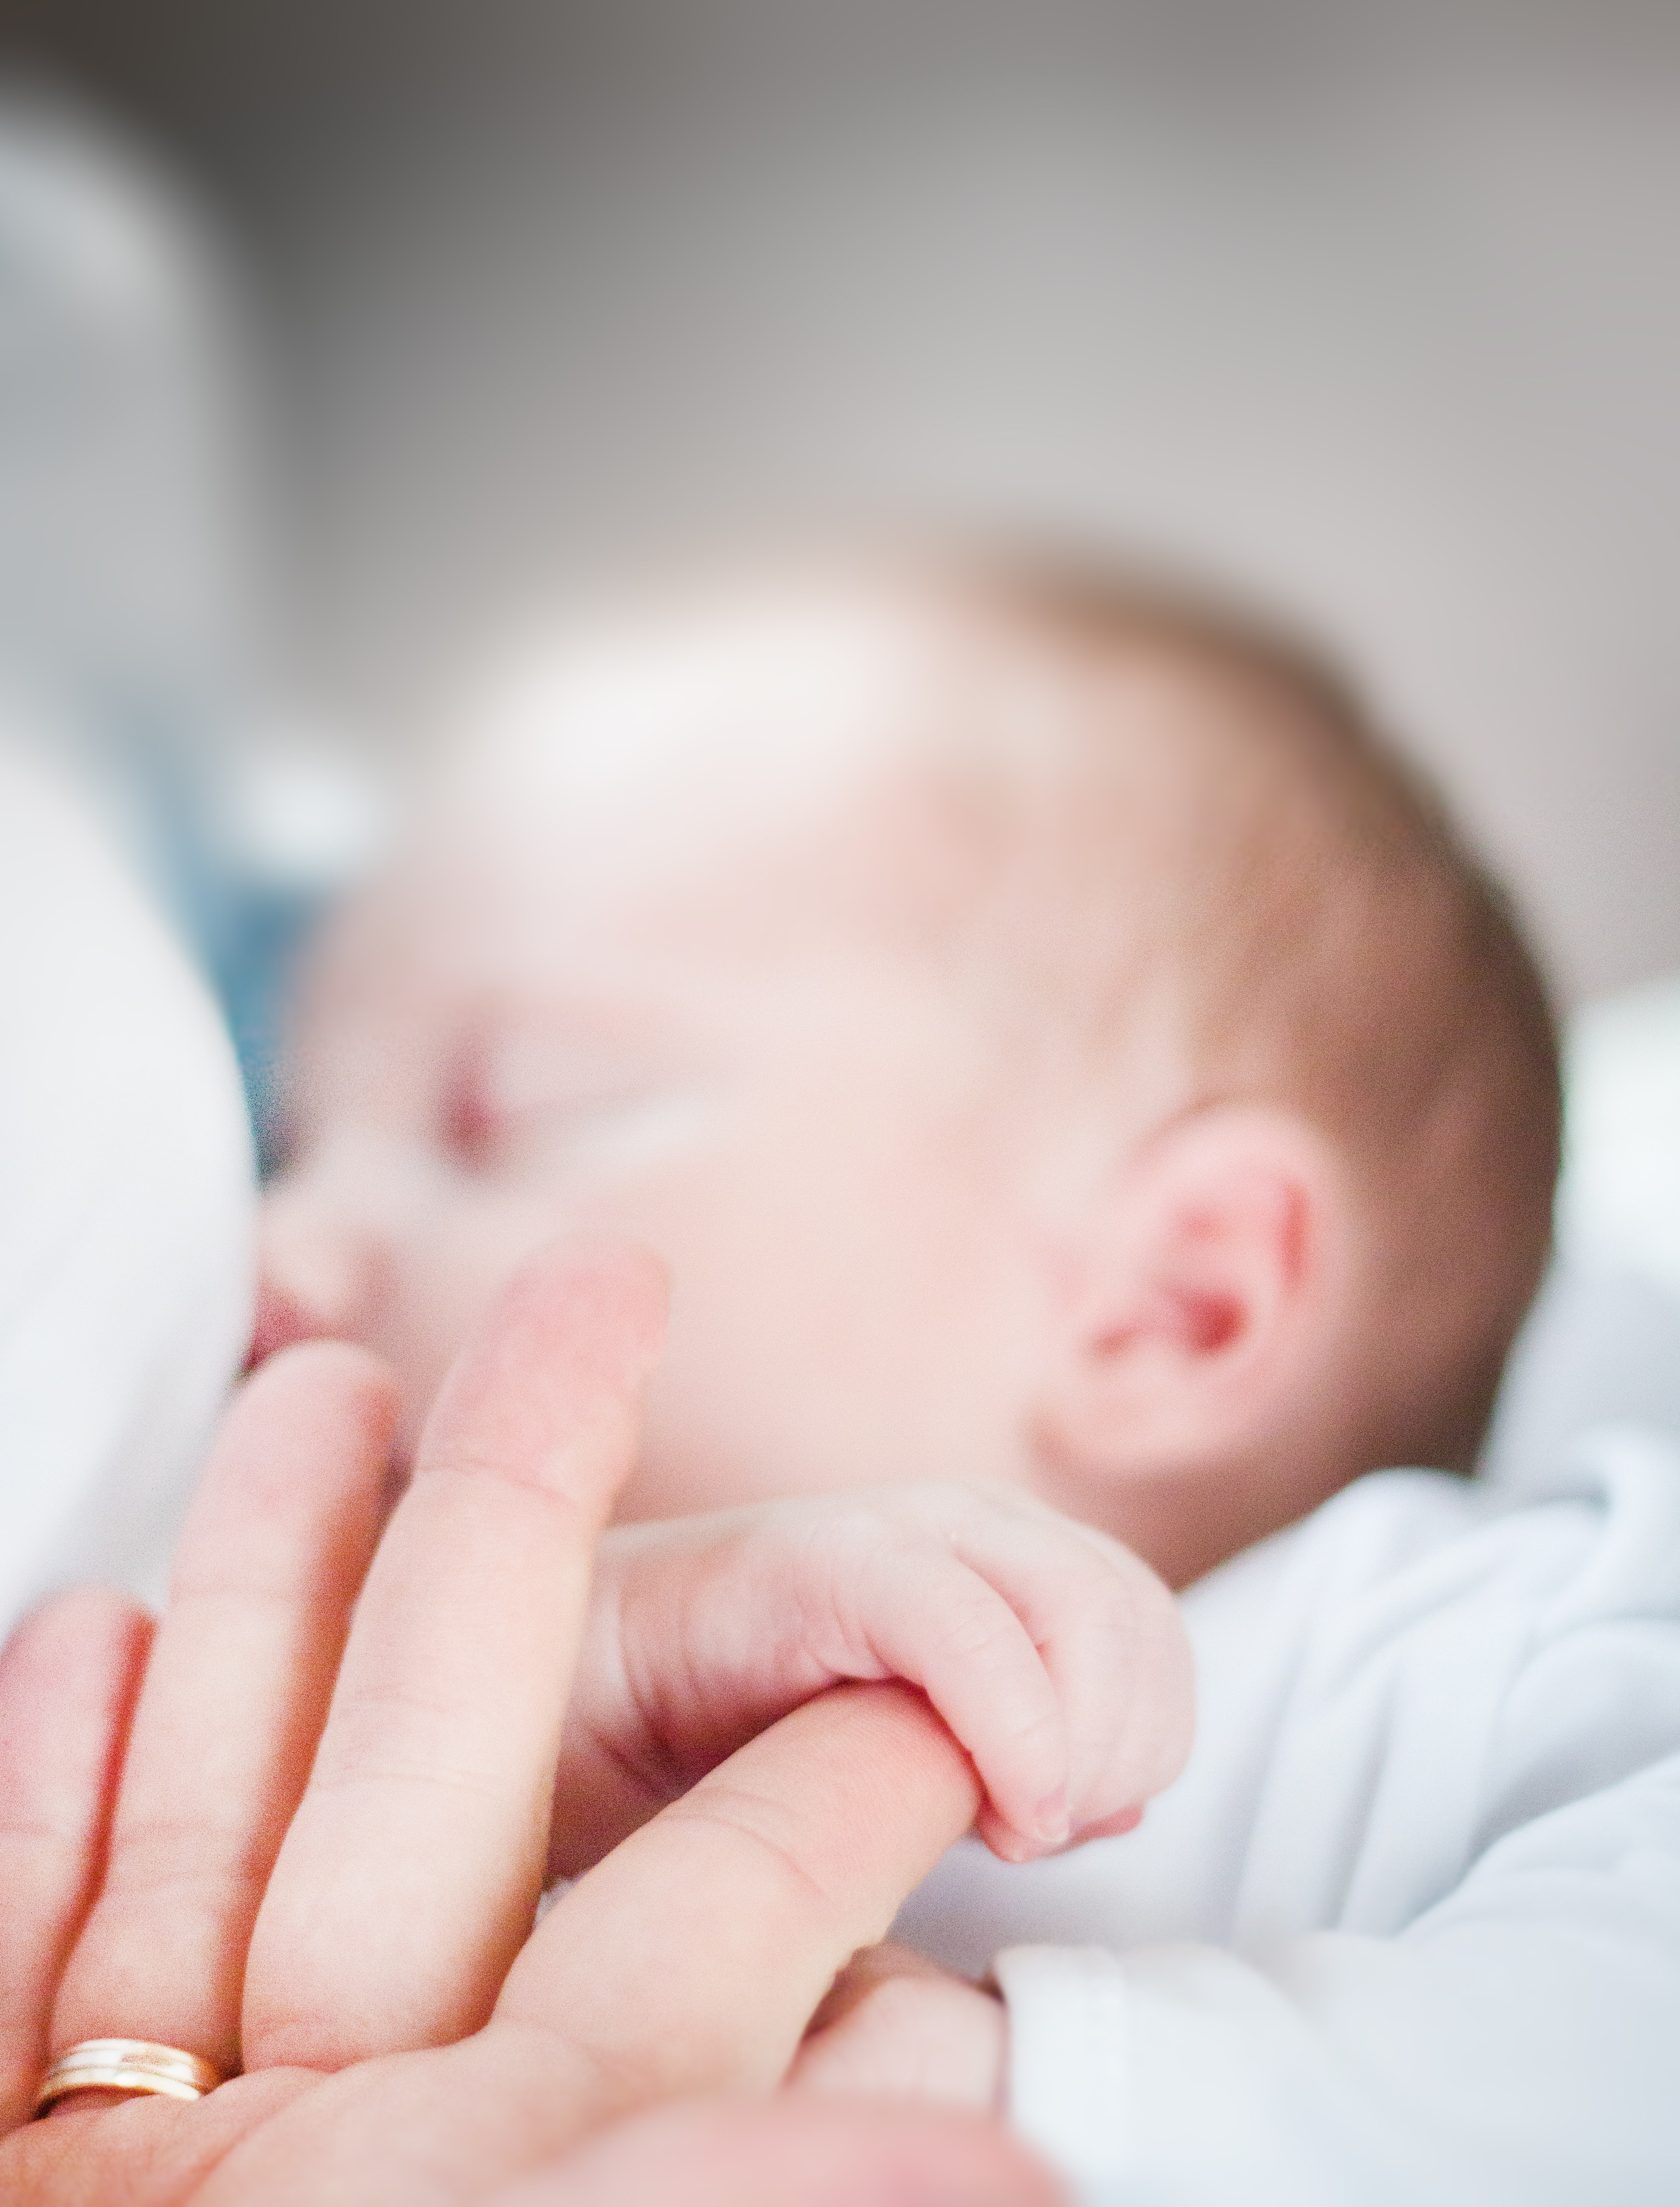 Tilt-shift Lens Photo of Infant's Hand Holding Index Finger of Adult, Baby, Little, Tiny, Son, HQ Photo